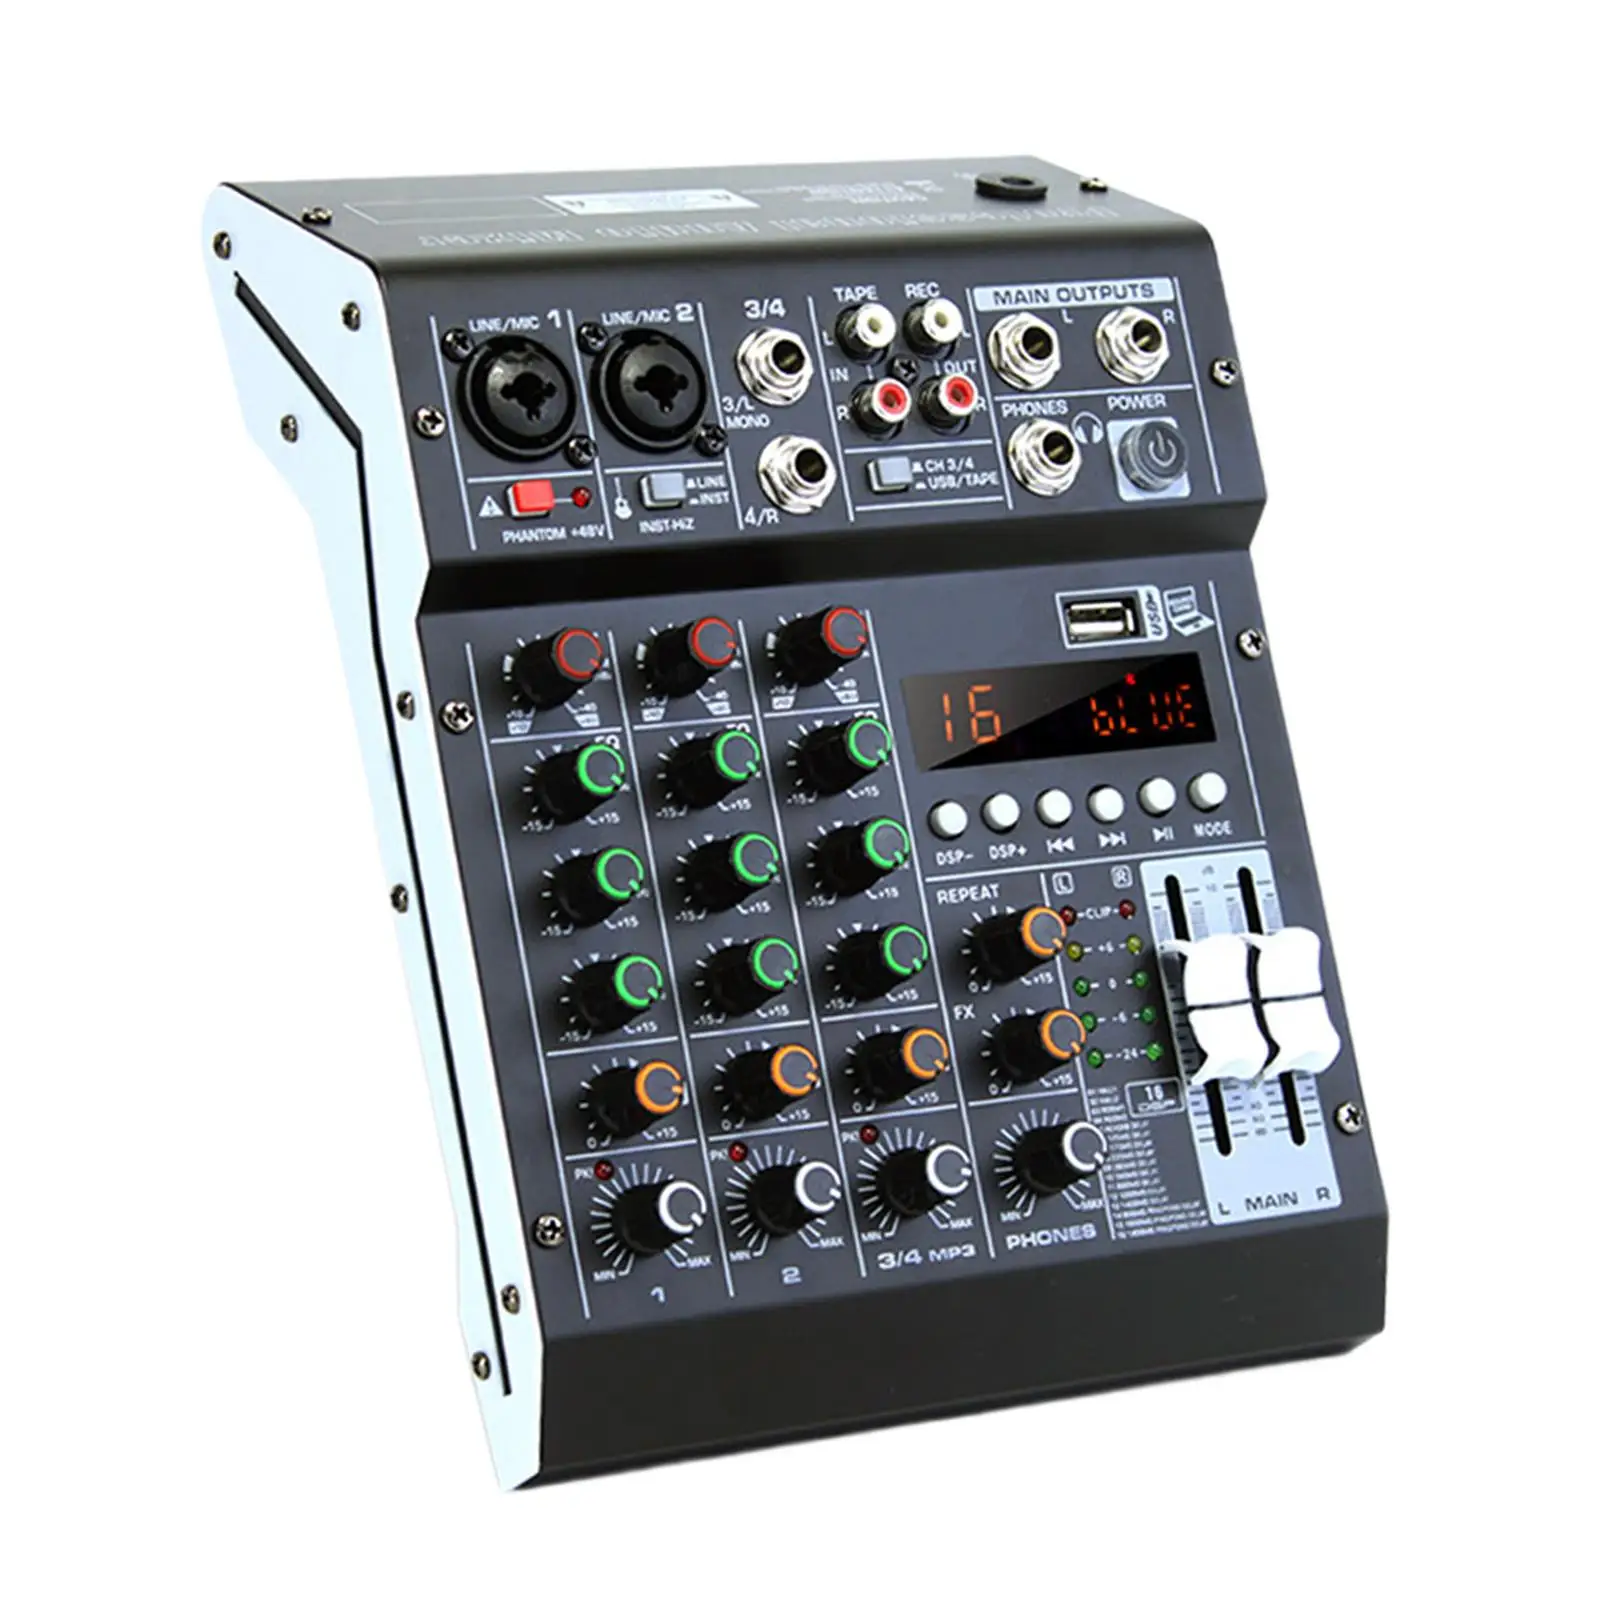 Audio Mixer Lightweight Build in 16 DSP Effects Sound Mixing Console for Karaoke Music Wedding PC Karaoke Interface Mixing Board